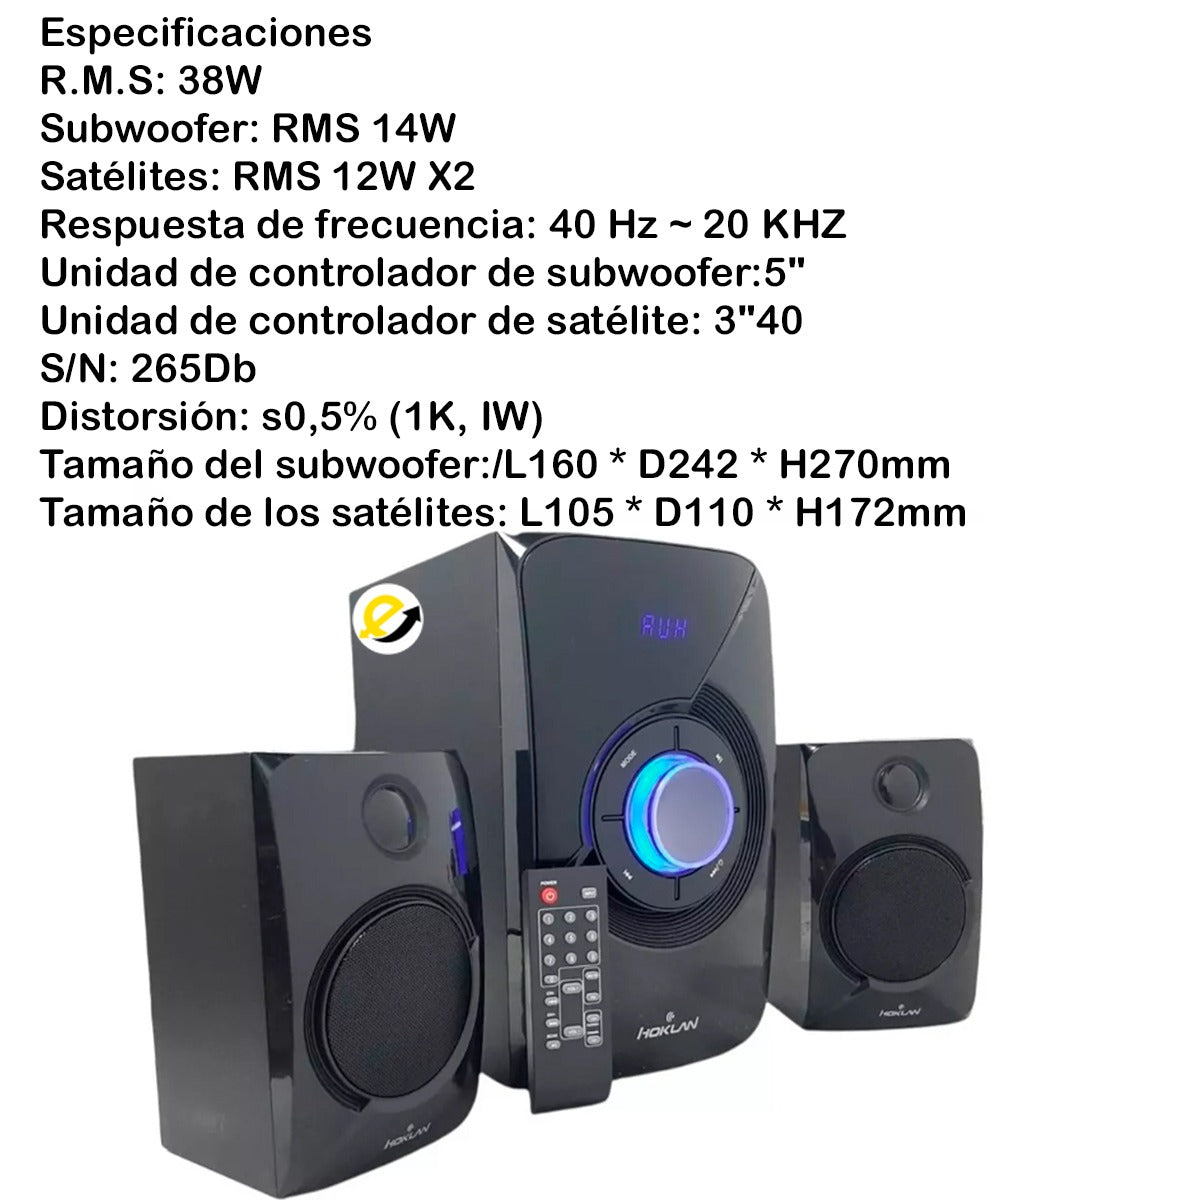 Teatro En Casa 2.1 Bluetooth Radio Fm Usb Puerto Sd 38w